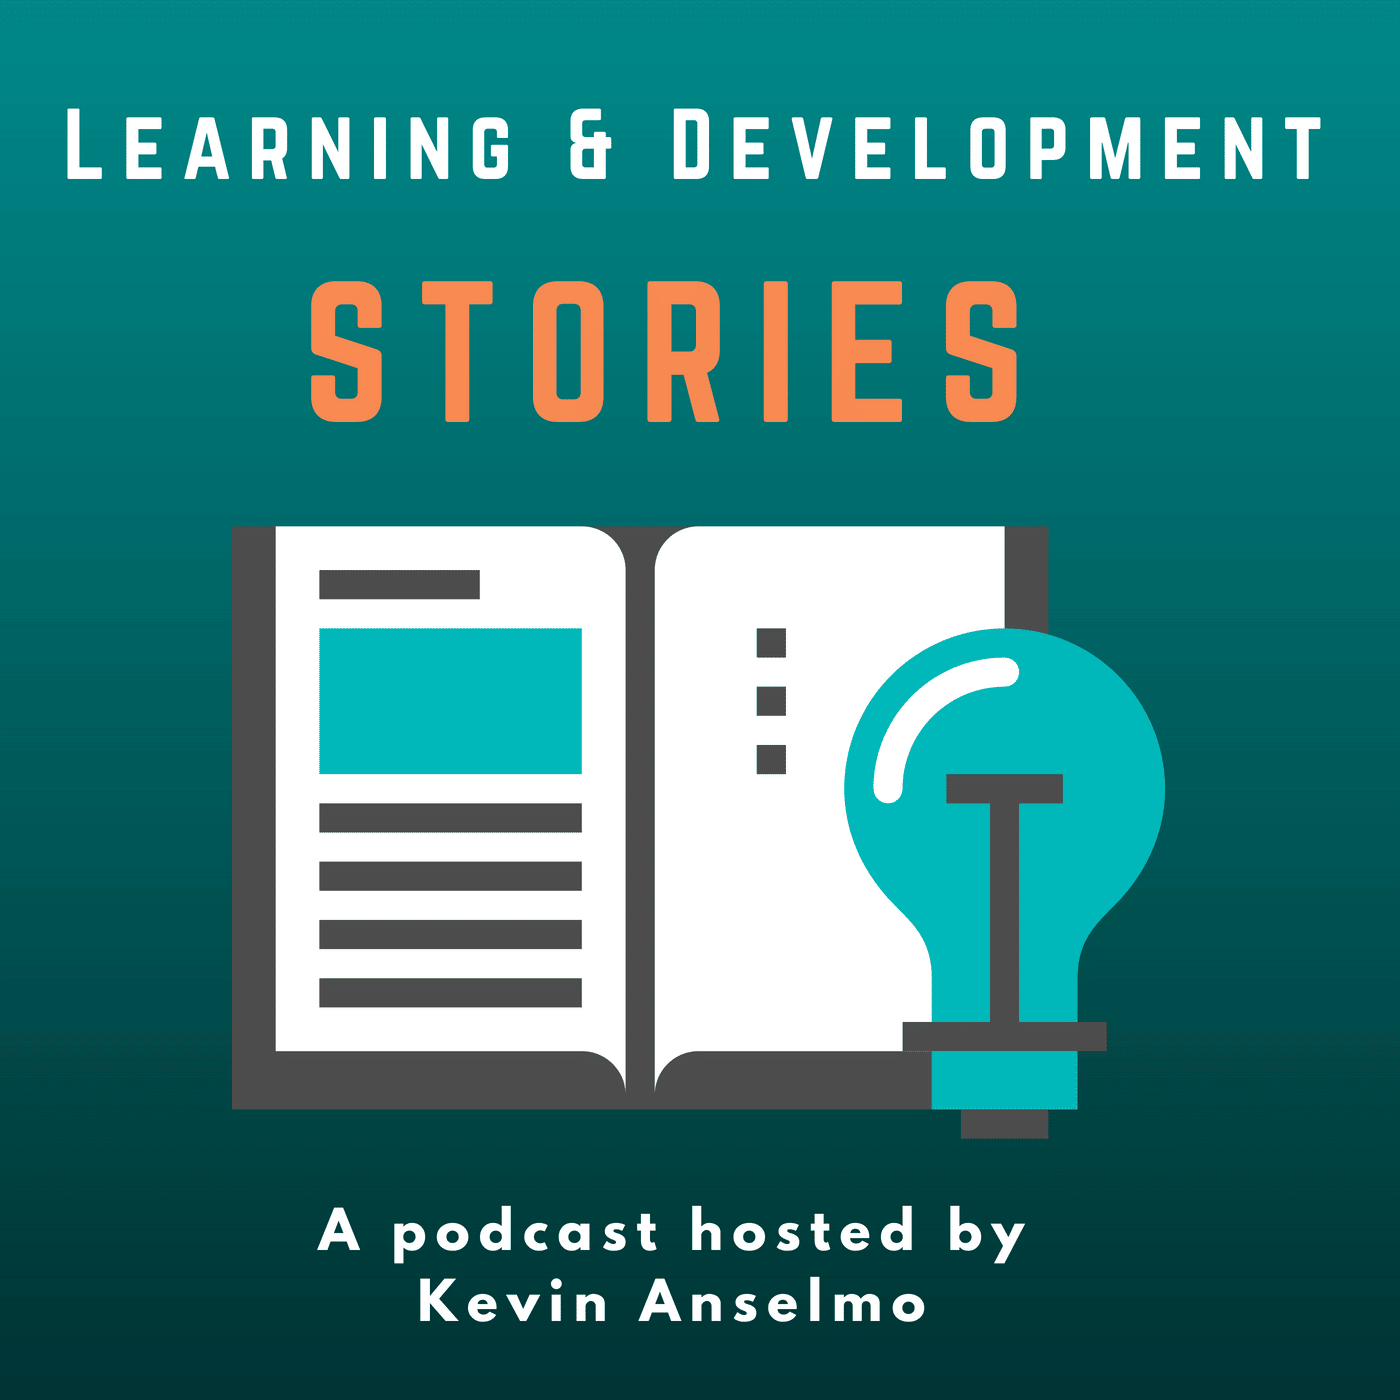 Learning & Development Stories